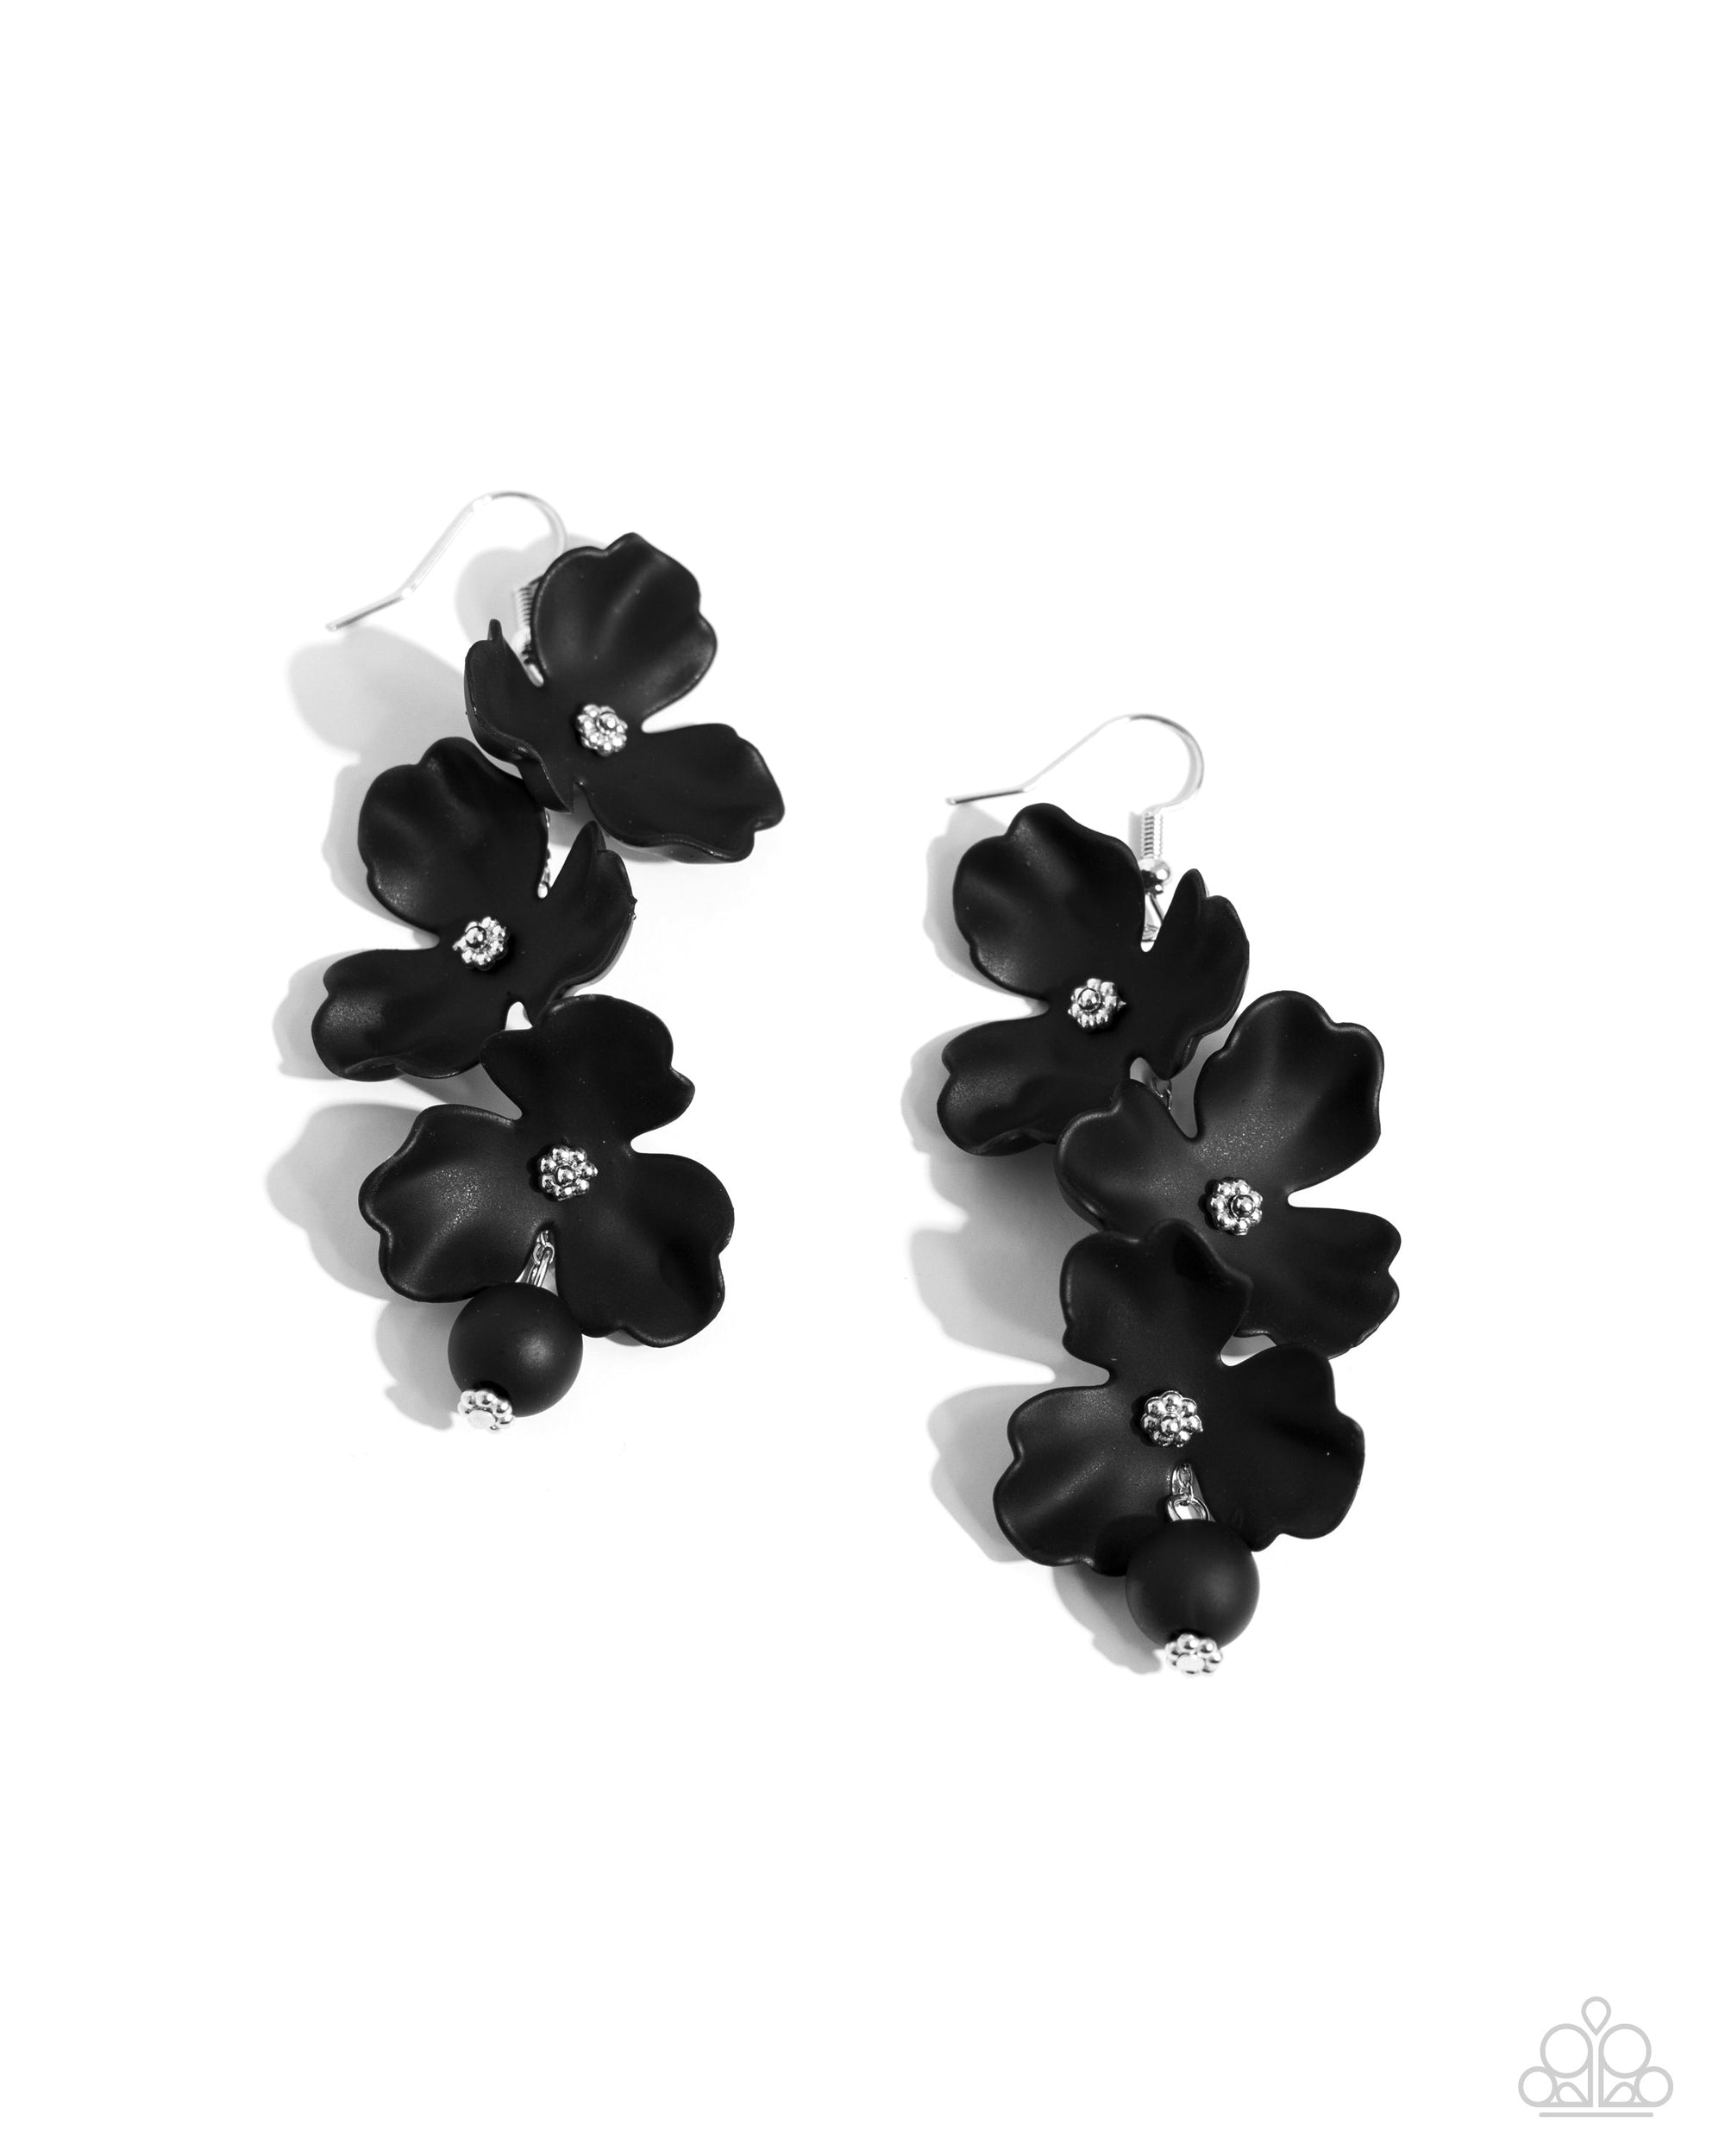 Plentiful Petals Black Acrylic Flower Earrings - Paparazzi Accessories- lightbox - CarasShop.com - $5 Jewelry by Cara Jewels